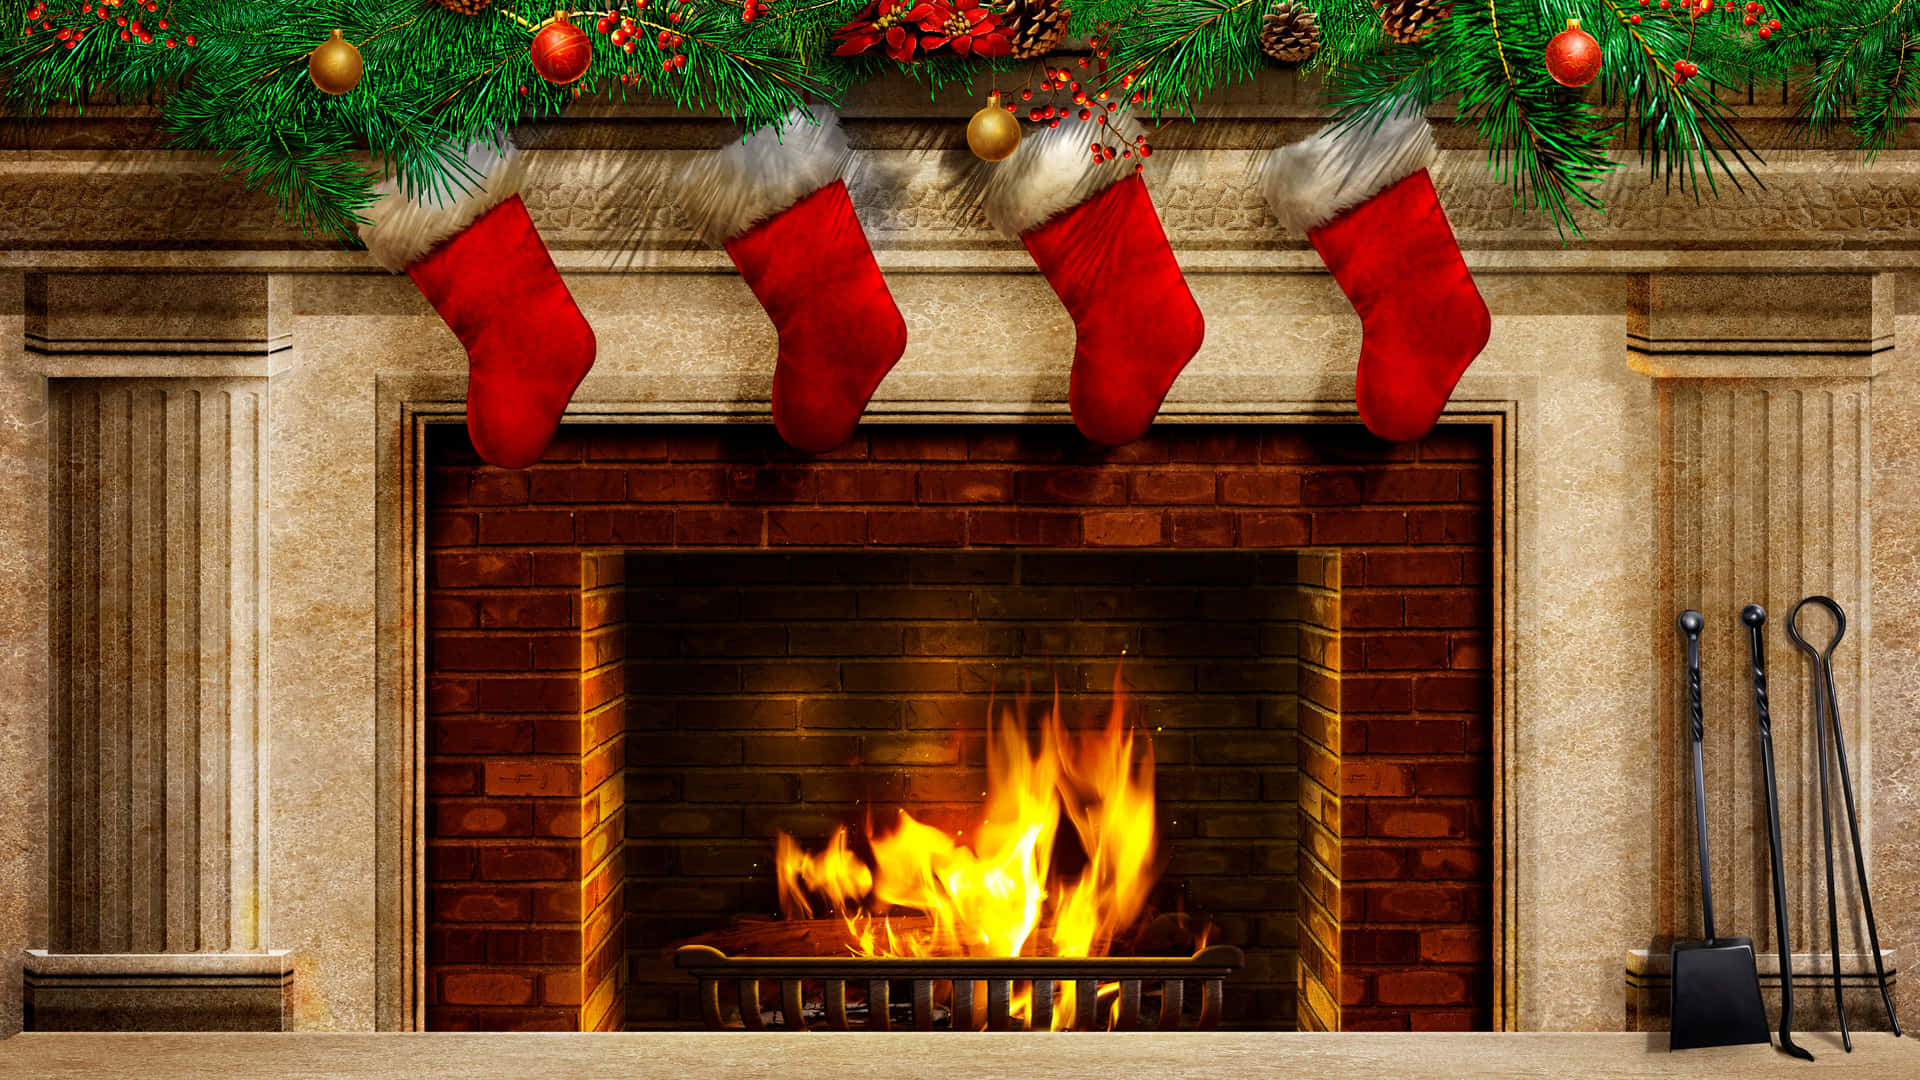 Cozy Christmas Fireplace Wallpaper